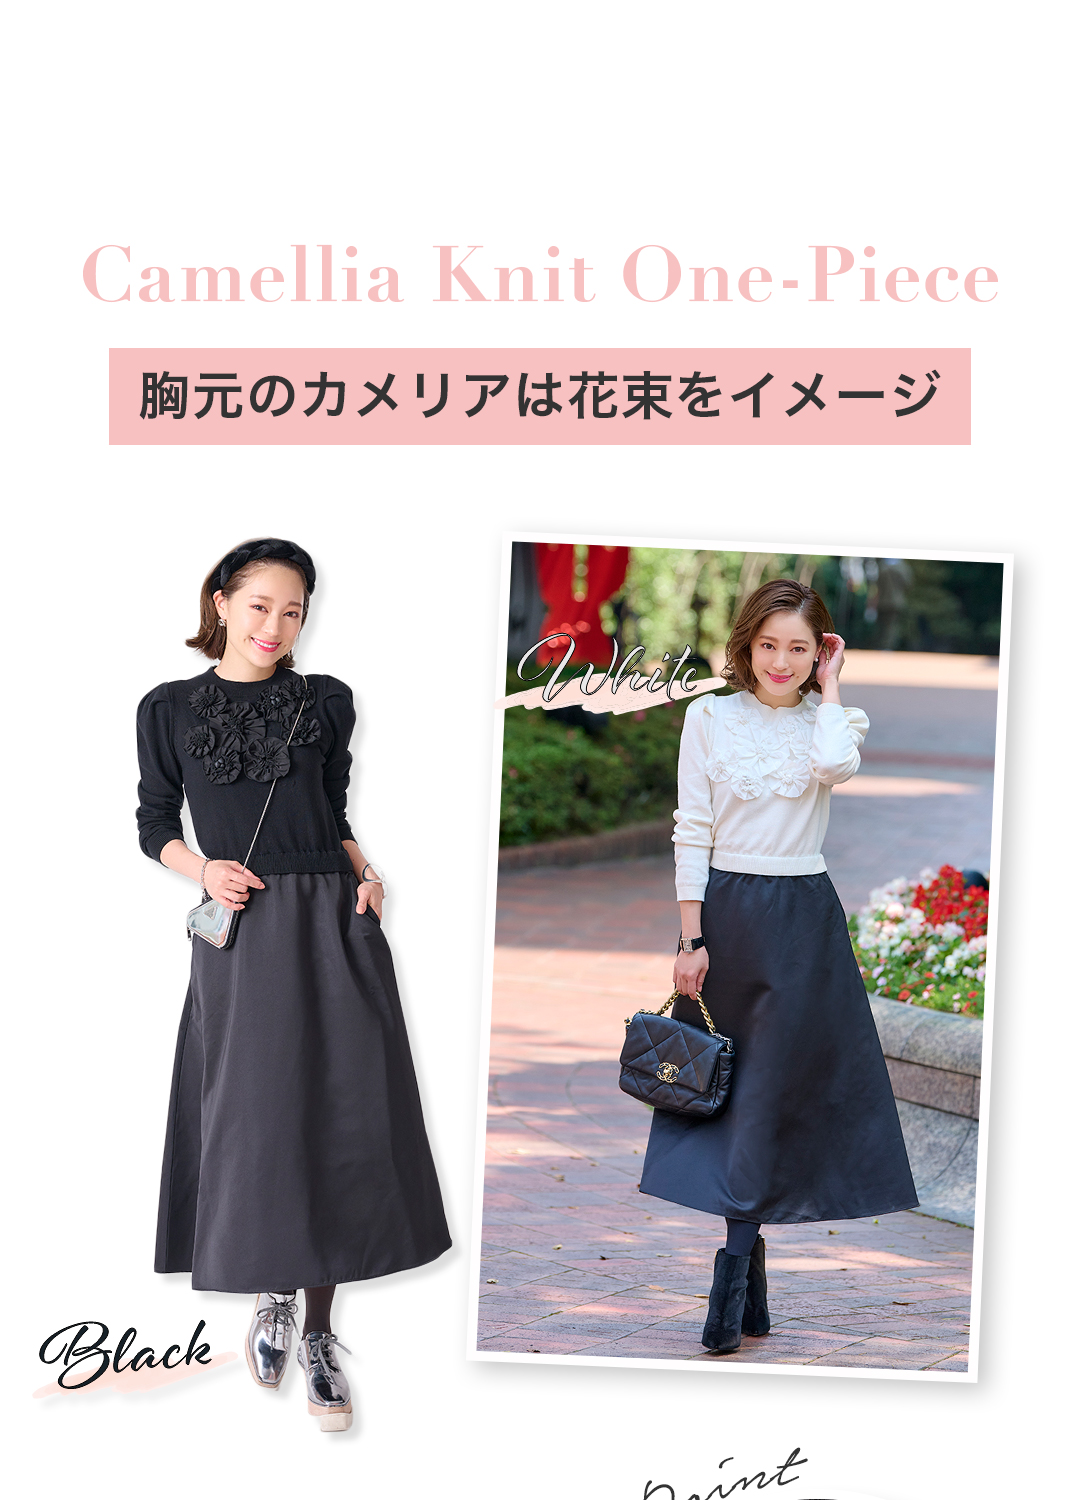 Camellia Knit One-Piece胸元のカメリアは花束をイメージ